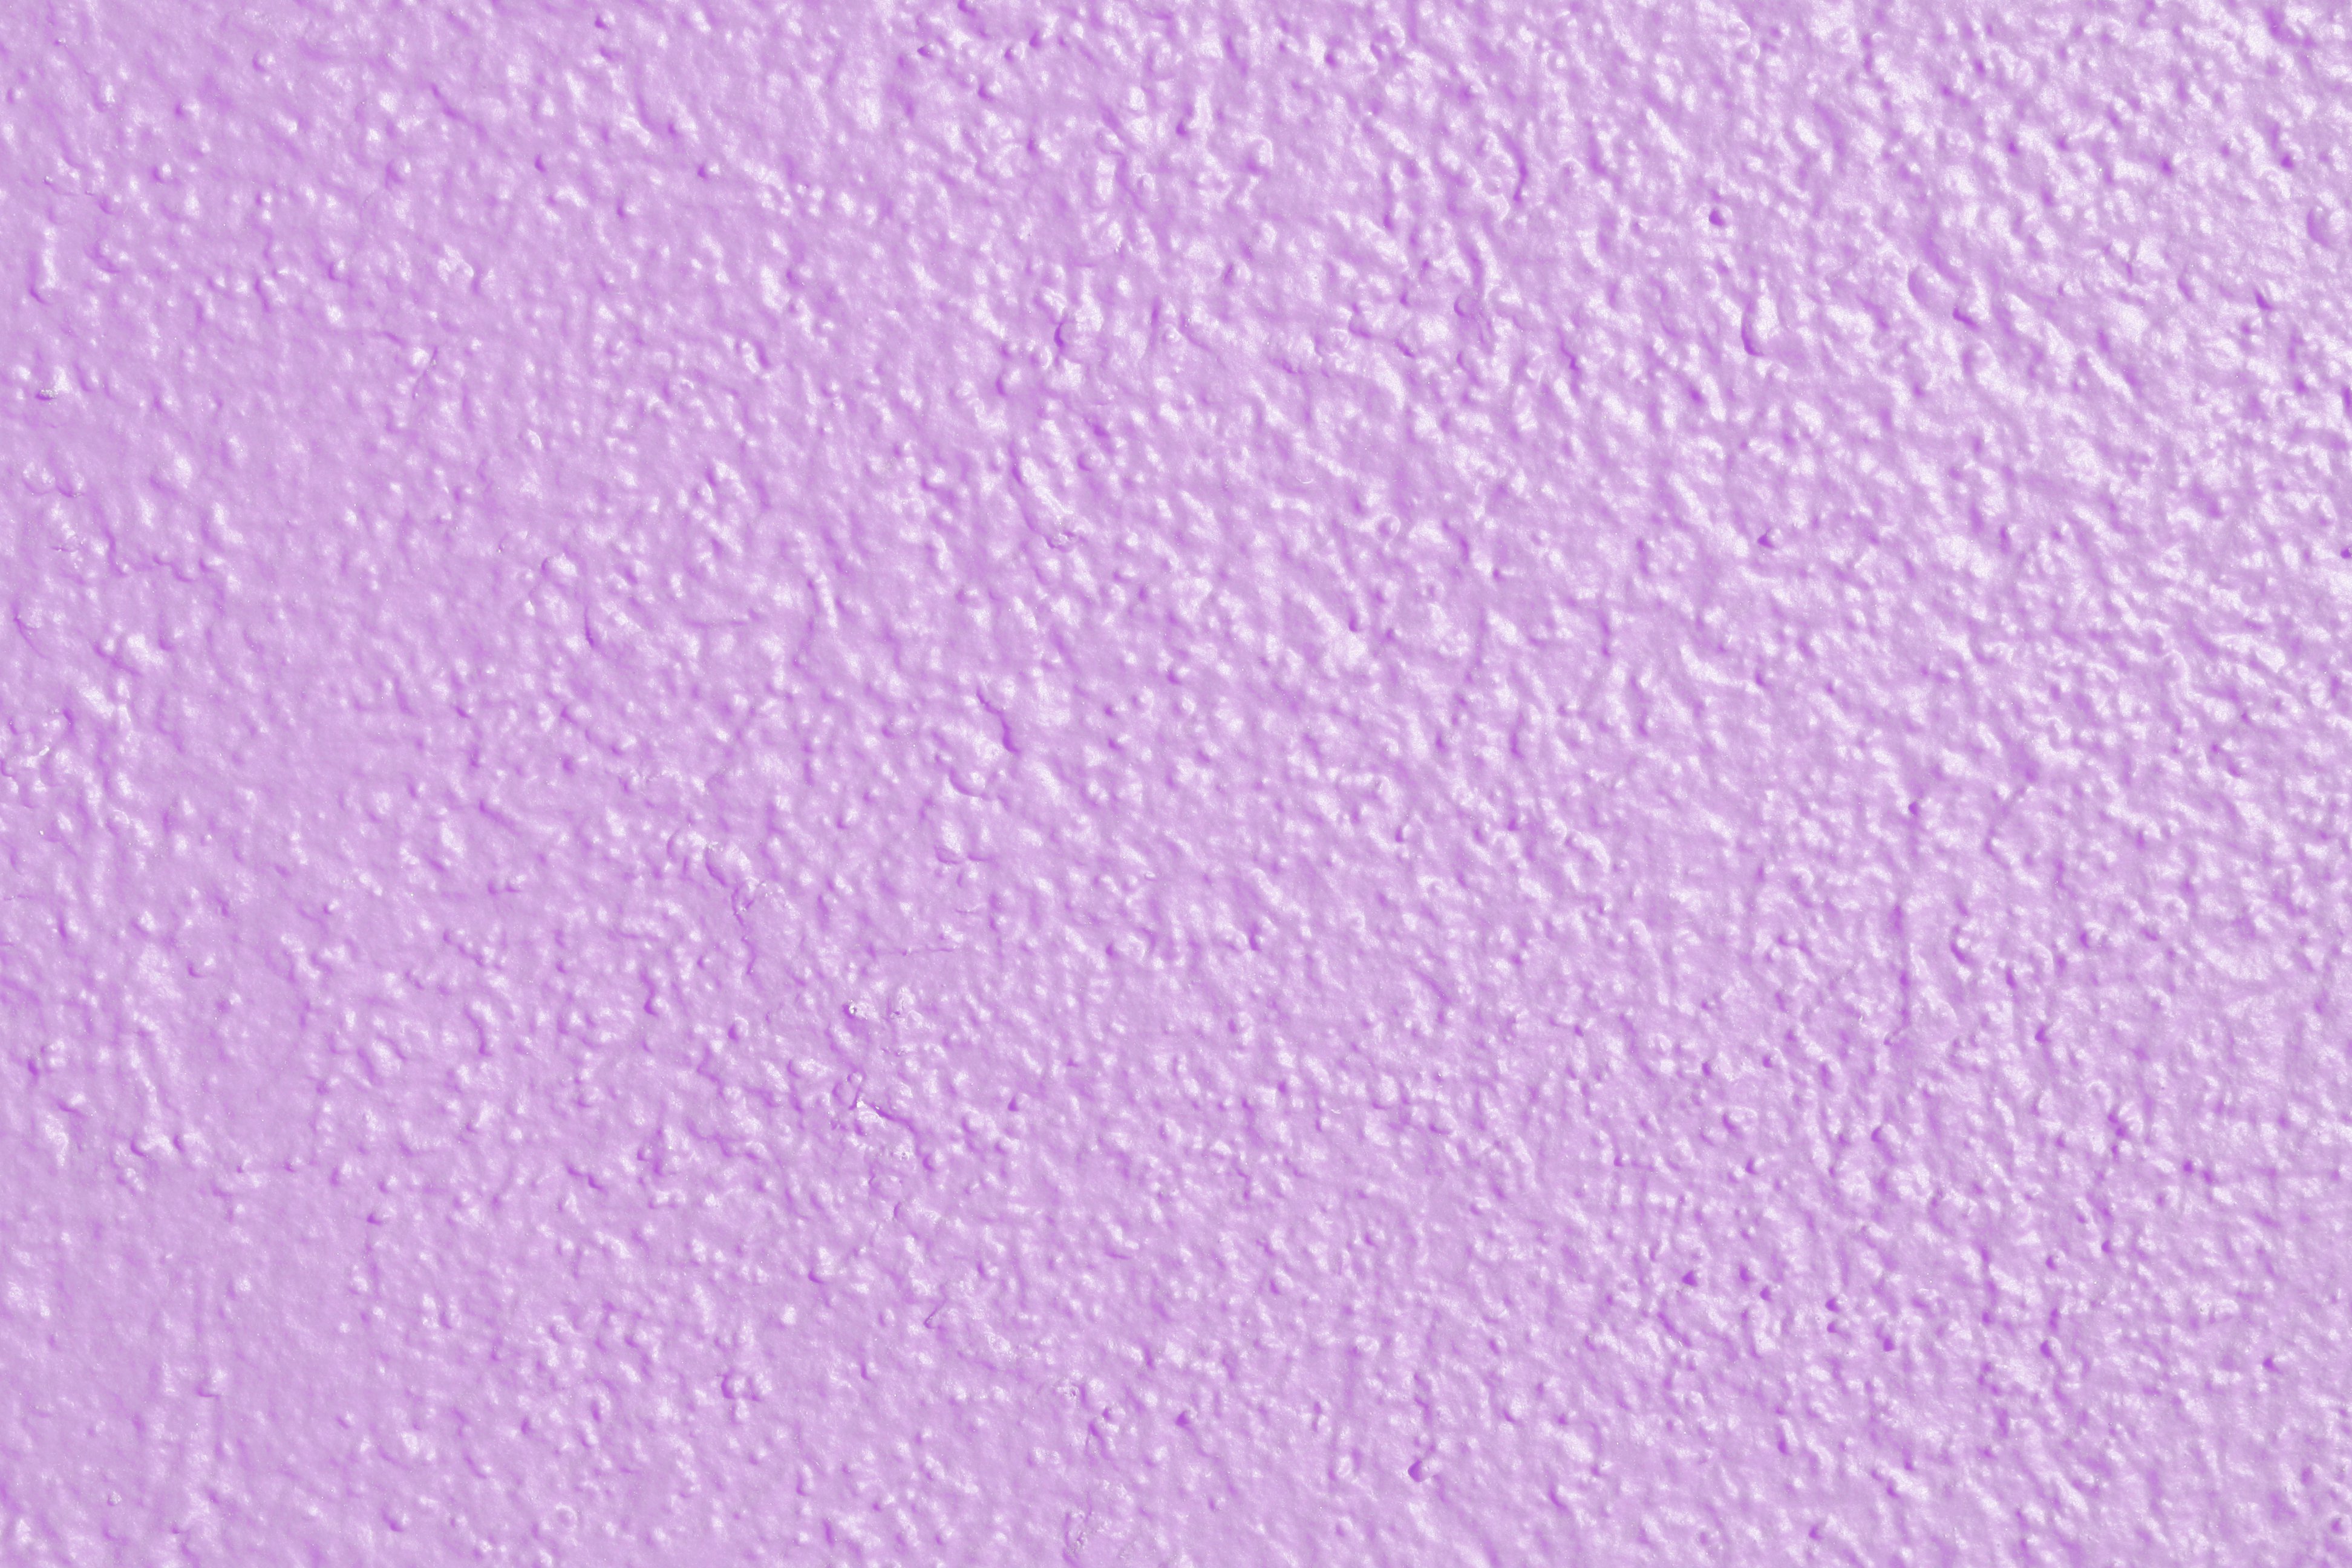 Lavender Light Purple Painted Wall Texture Picture | Free Photograph |  Photos Public Domain